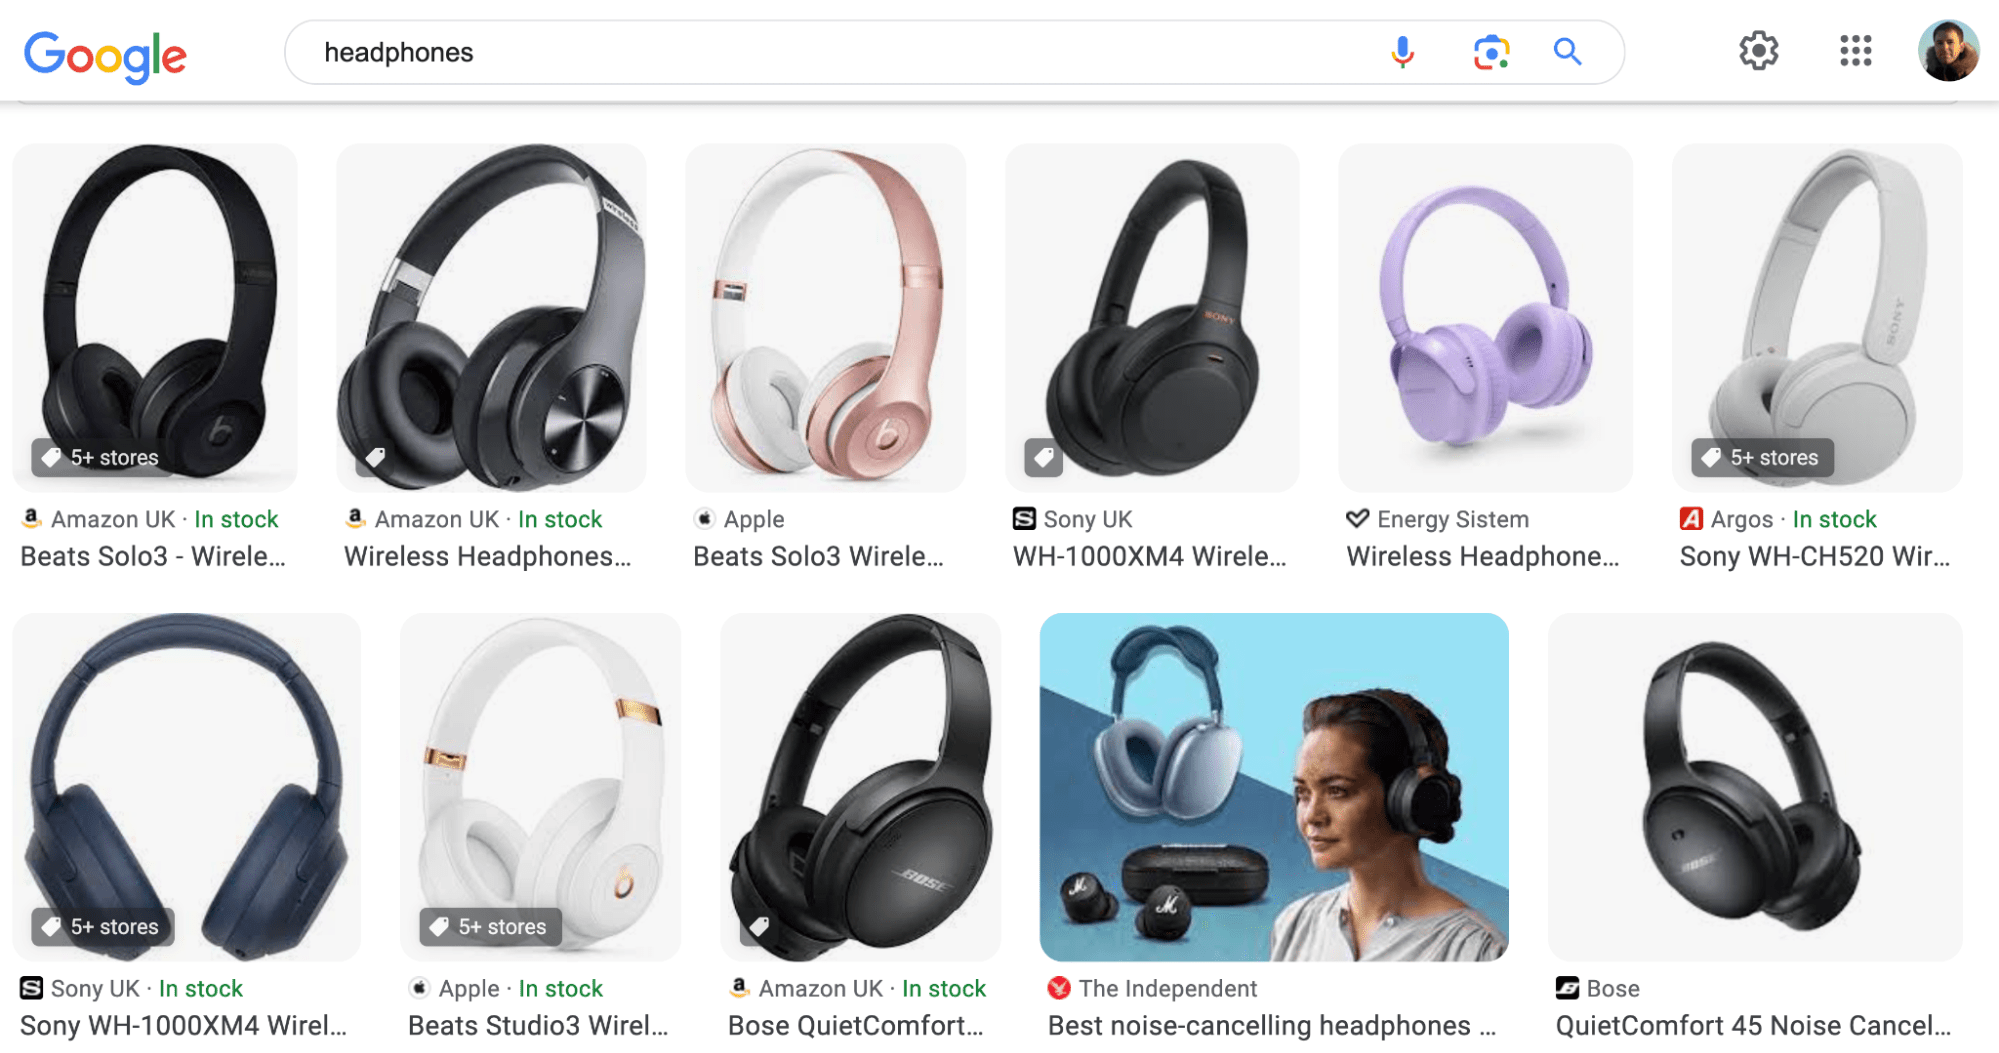 Headphones SERP, via Google Images
